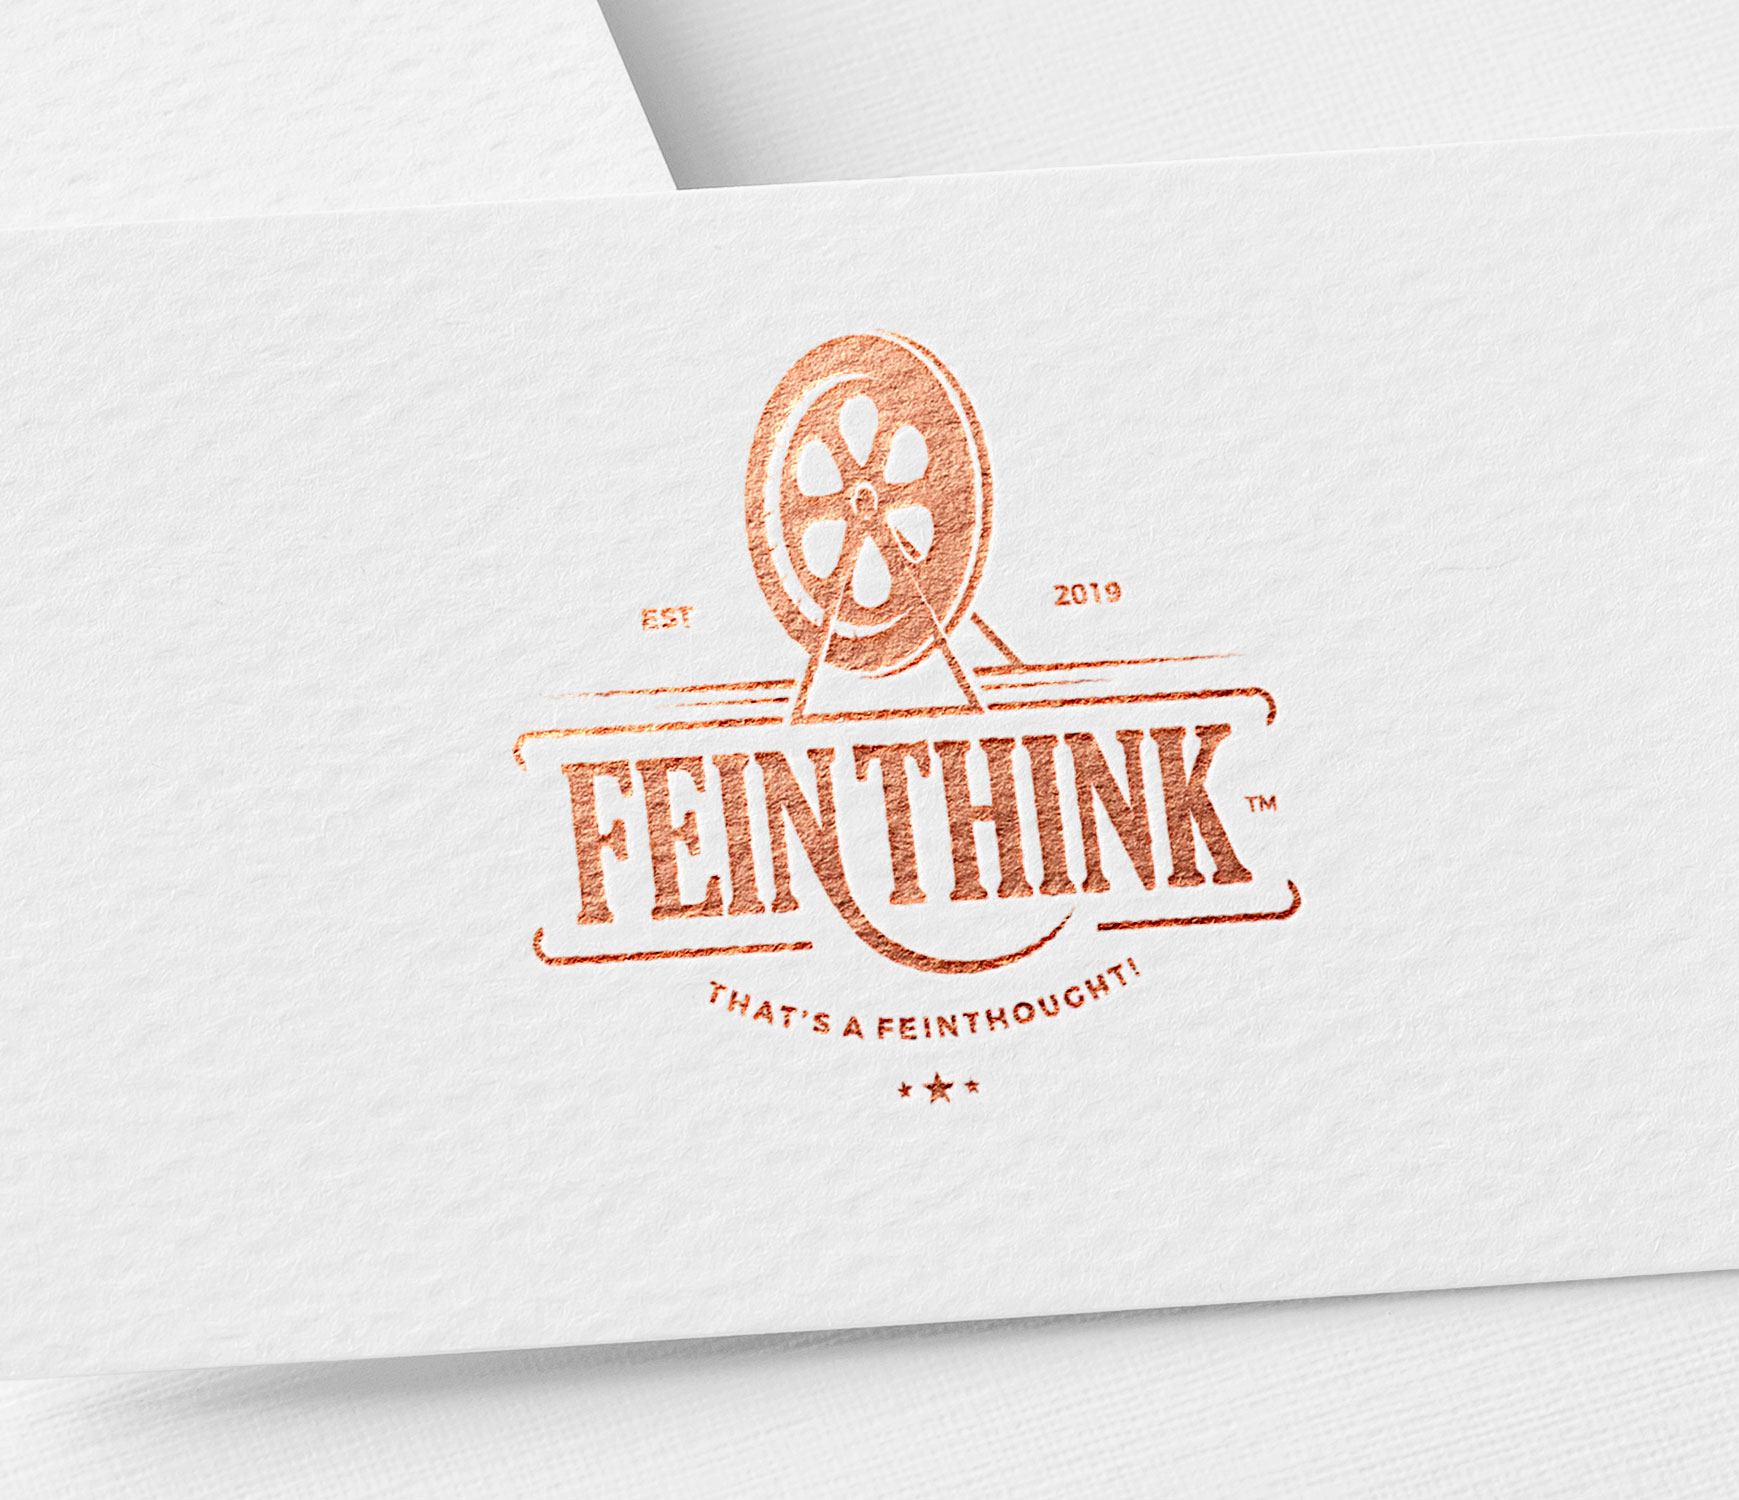 Feinthink Business Cards